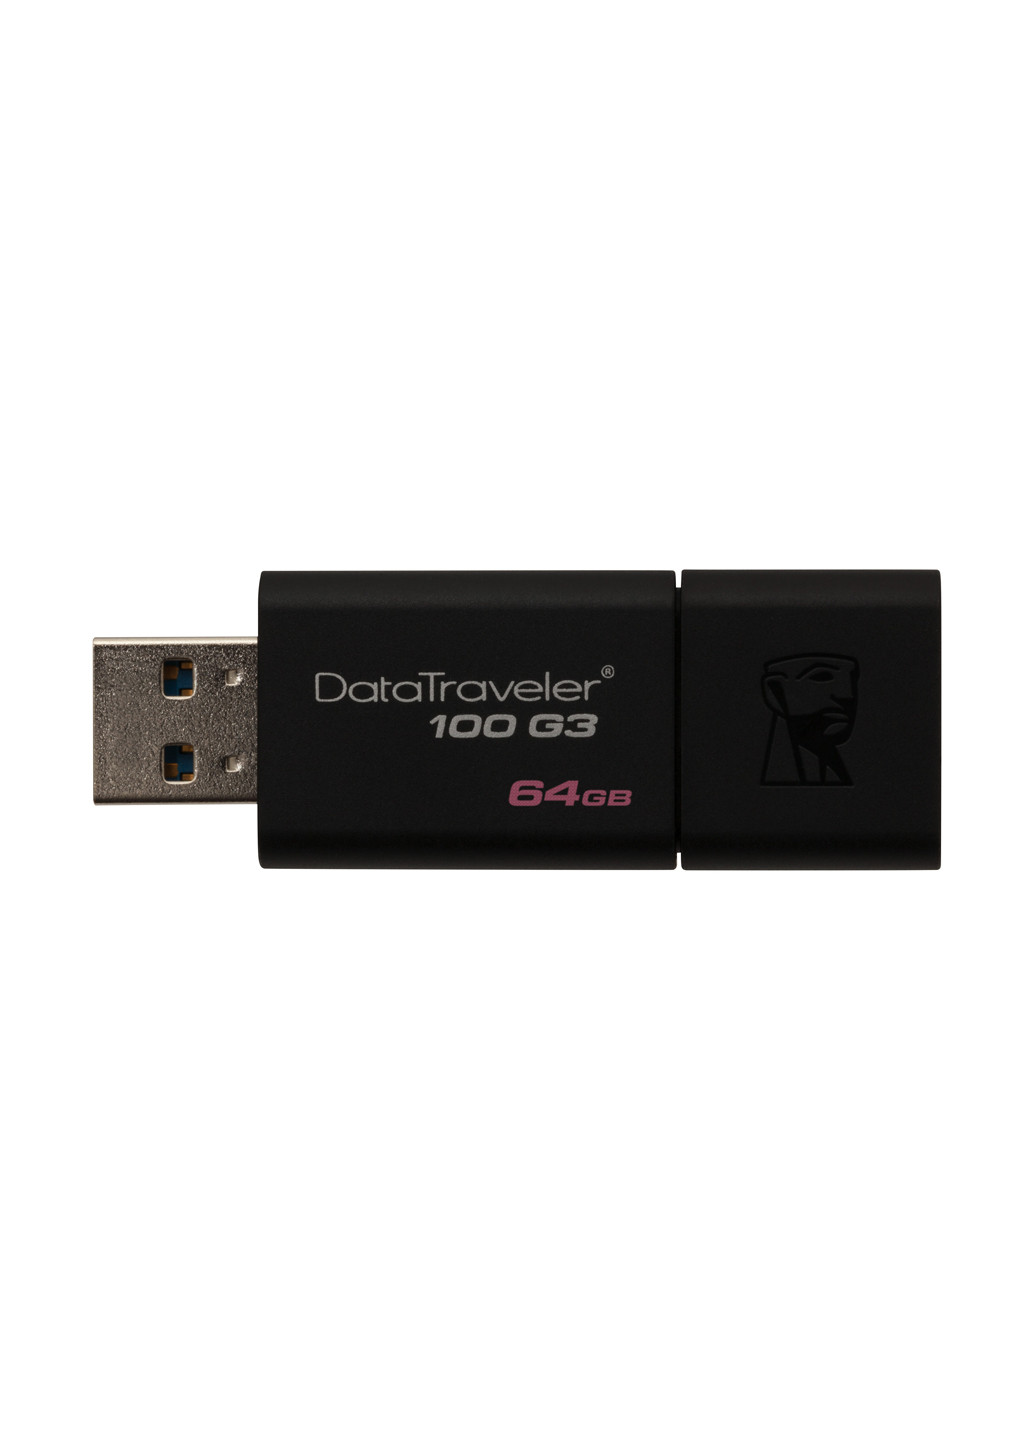 Флеш память USB DataTraveler 100 G3 64GB USB 3.0 (DT100G3/64GB) Kingston флеш память usb kingston datatraveler 100 g3 64gb usb 3.0 (dt100g3/64gb) (134201733)